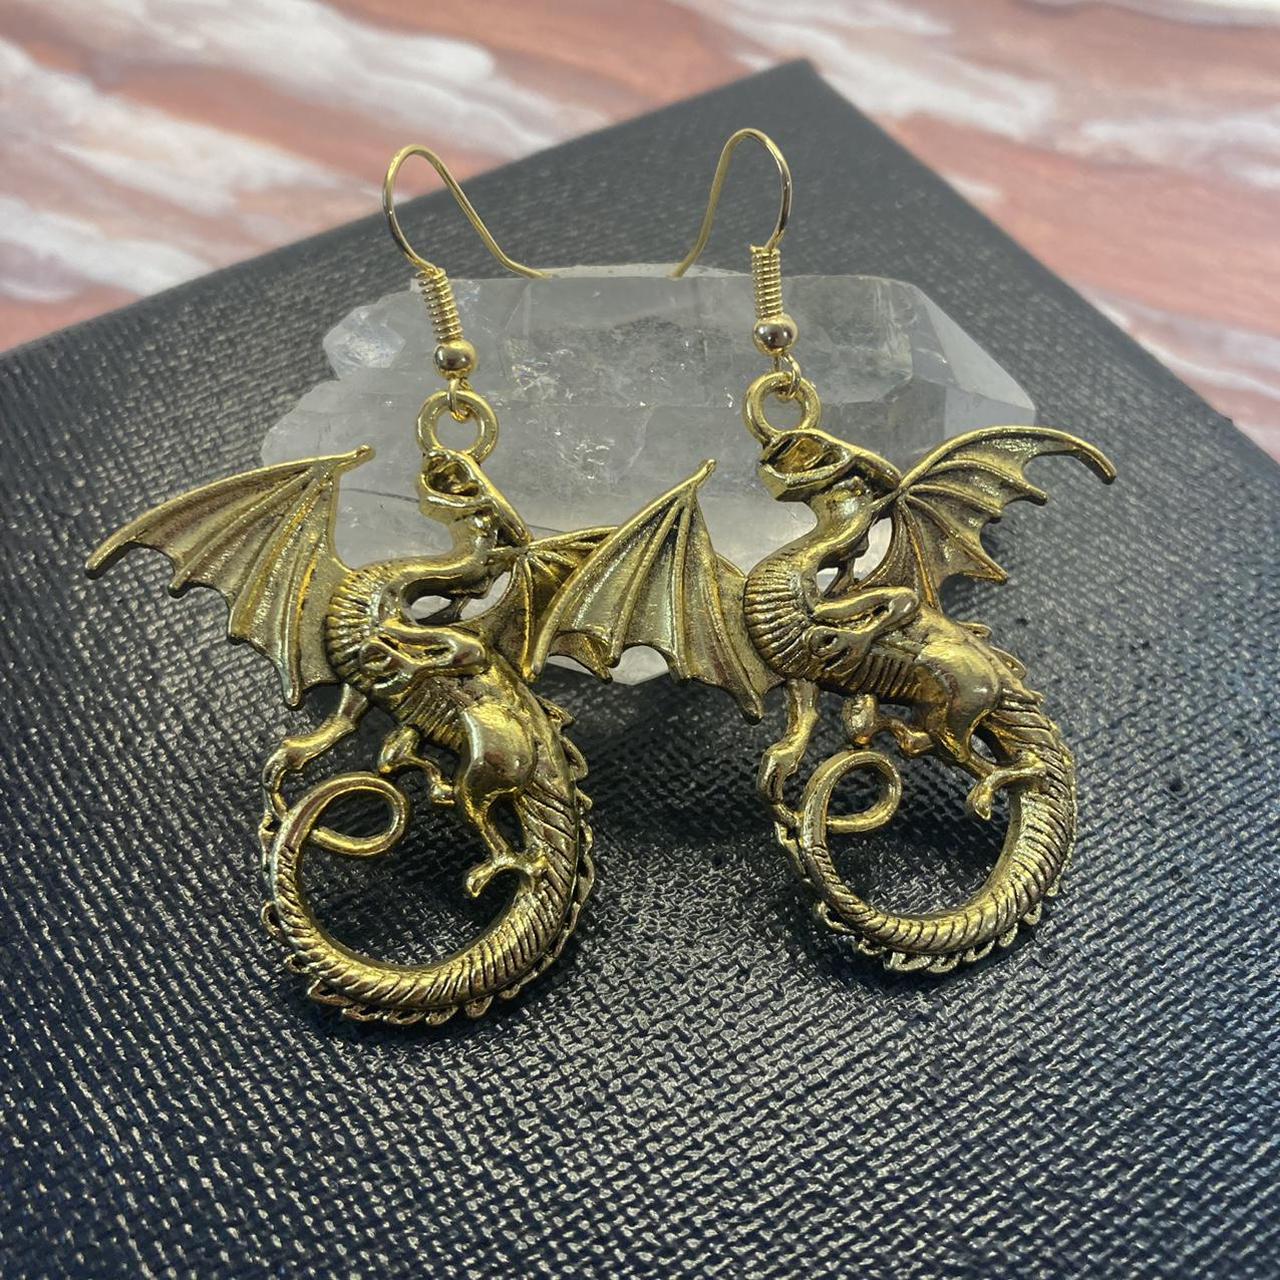 Product Image 2 - Golden dragon dangle earrings! Quarter